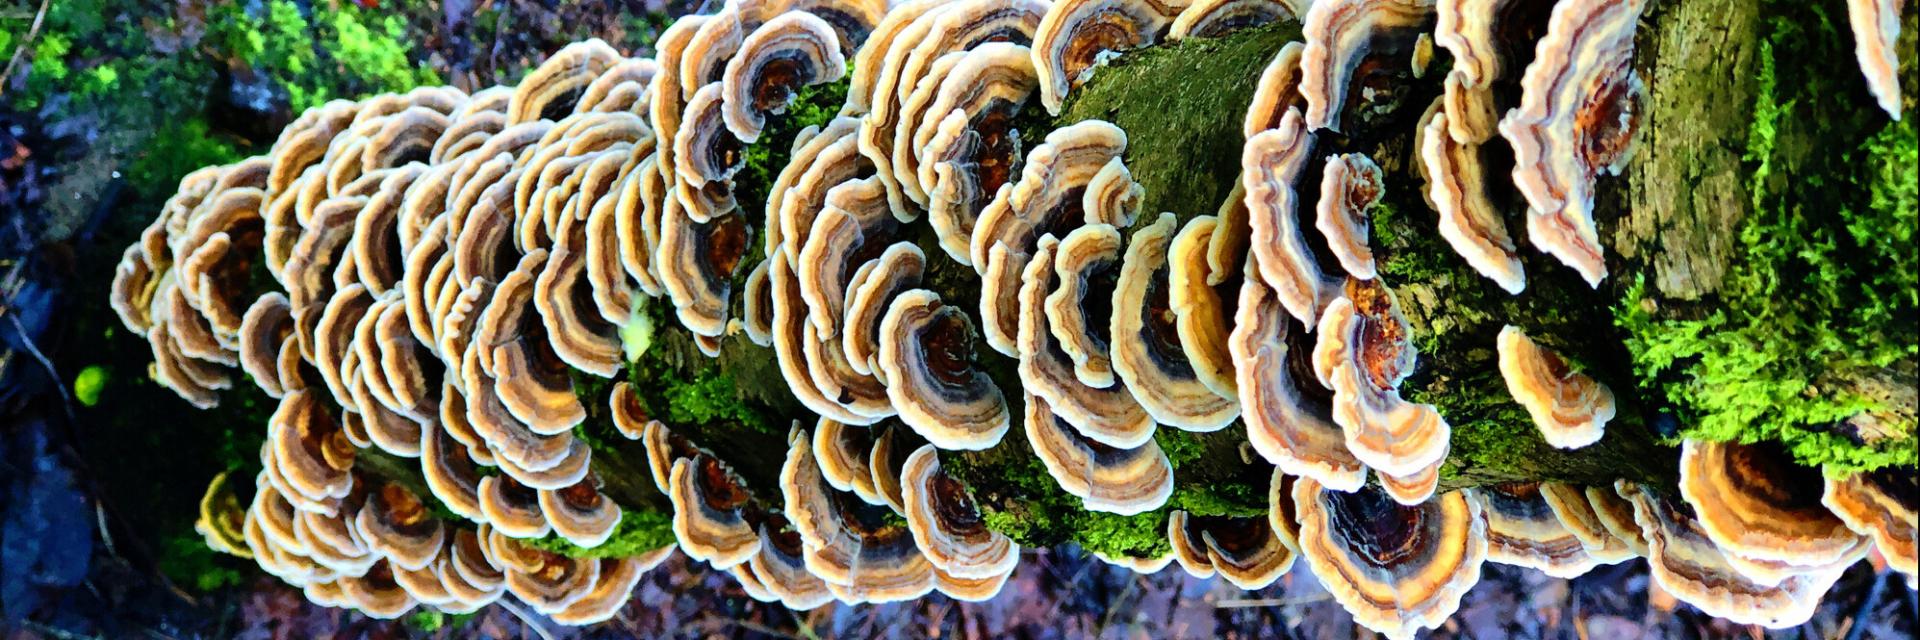 Fungi (Coriolus versicolor, also known as turkey tail mushrooms), growing on a tree.